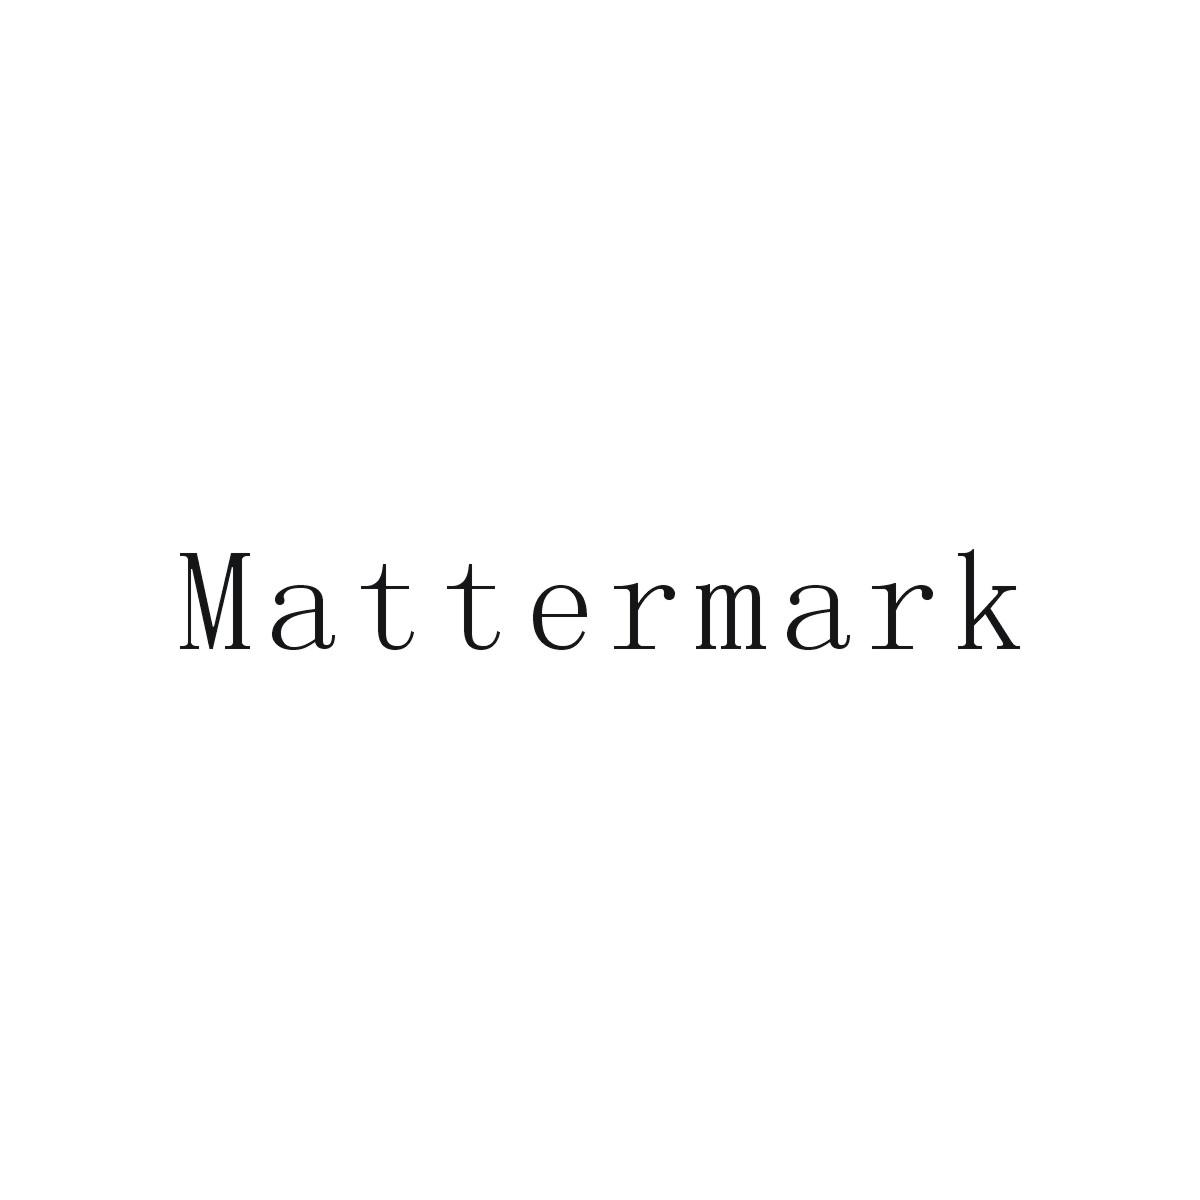 MATTERMARK气象信息商标转让费用买卖交易流程